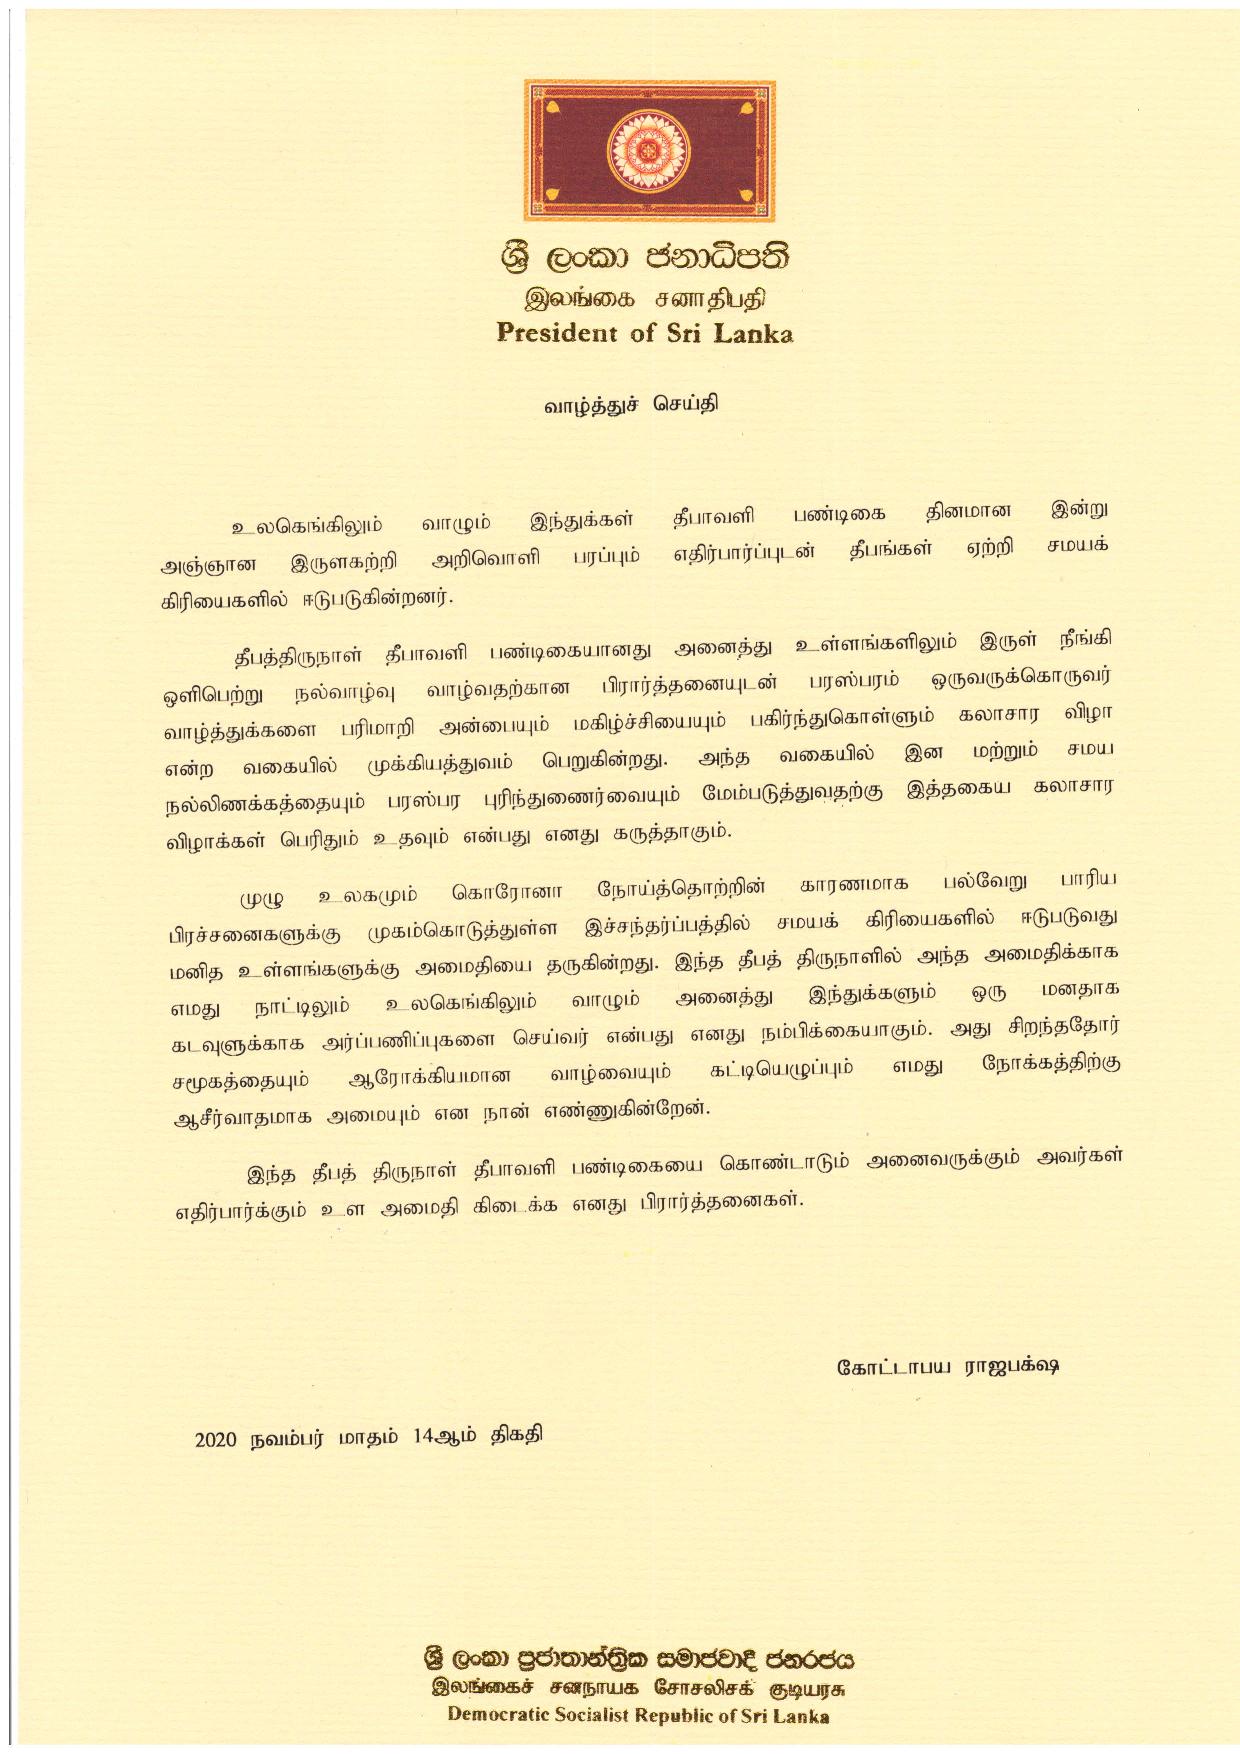 The message of H.E Gotabaya Rajapaksa, President of Sri Lanka on the occasion of Deepavali 2020